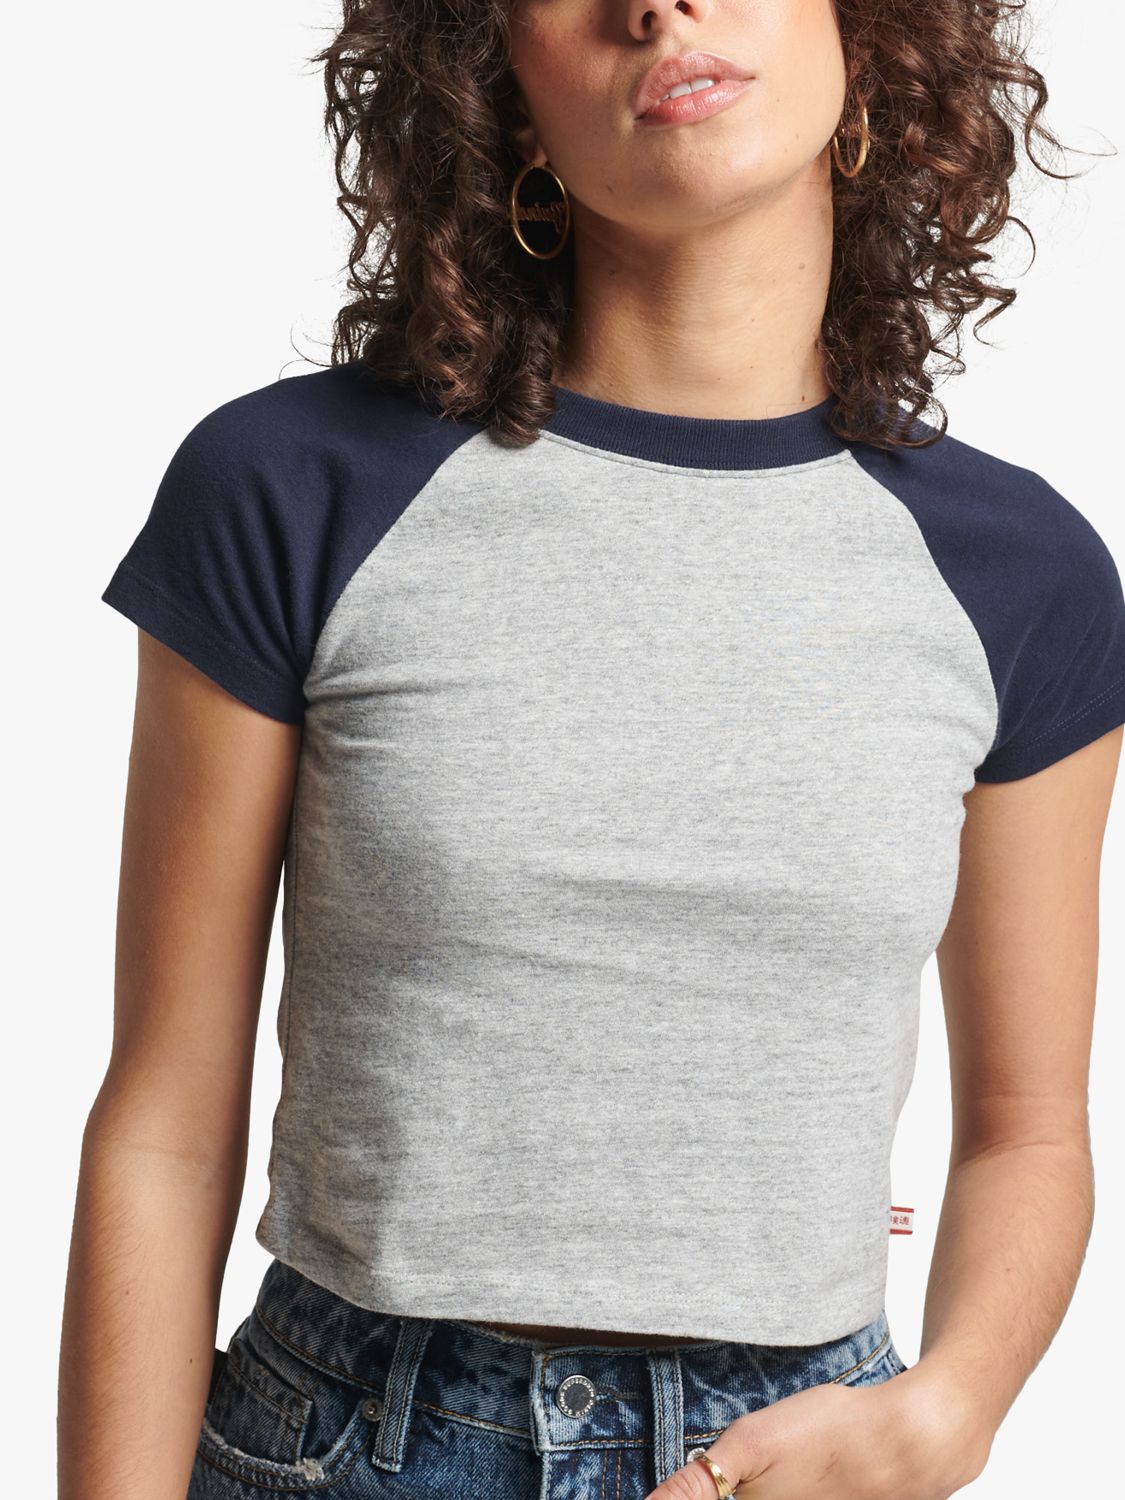 Women's Organic Cotton Vintage Baseball T-Shirt in Black/white